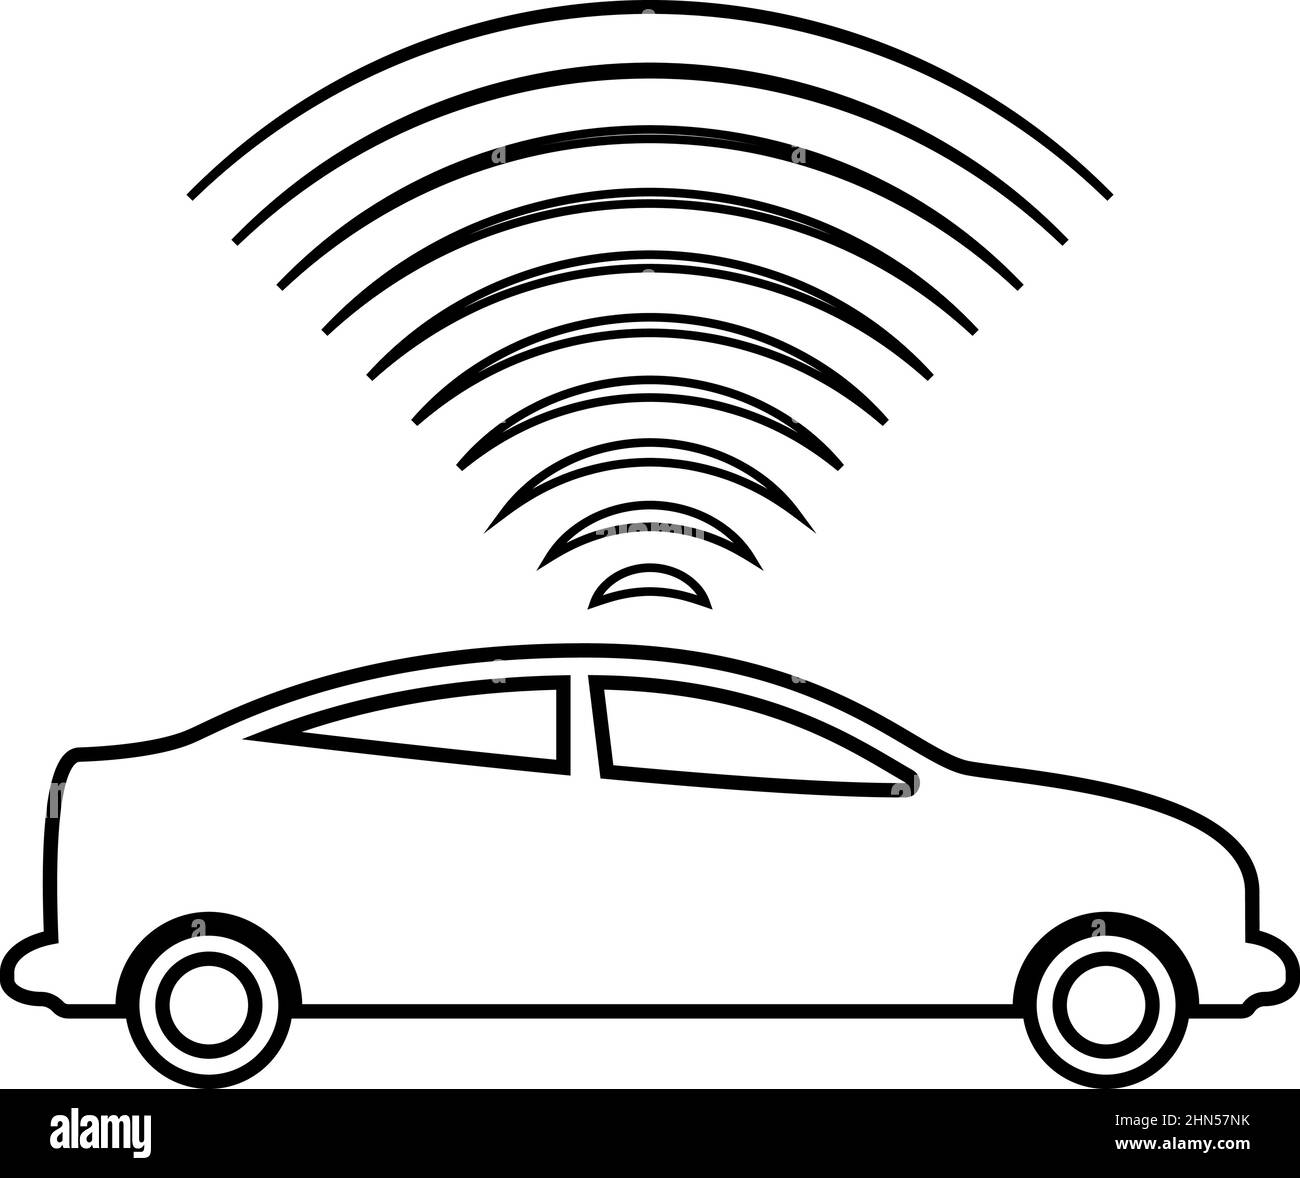 Car radio signals sensor smart technology autopilot up direction contour outline line icon black color vector illustration image thin flat style Stock Vector